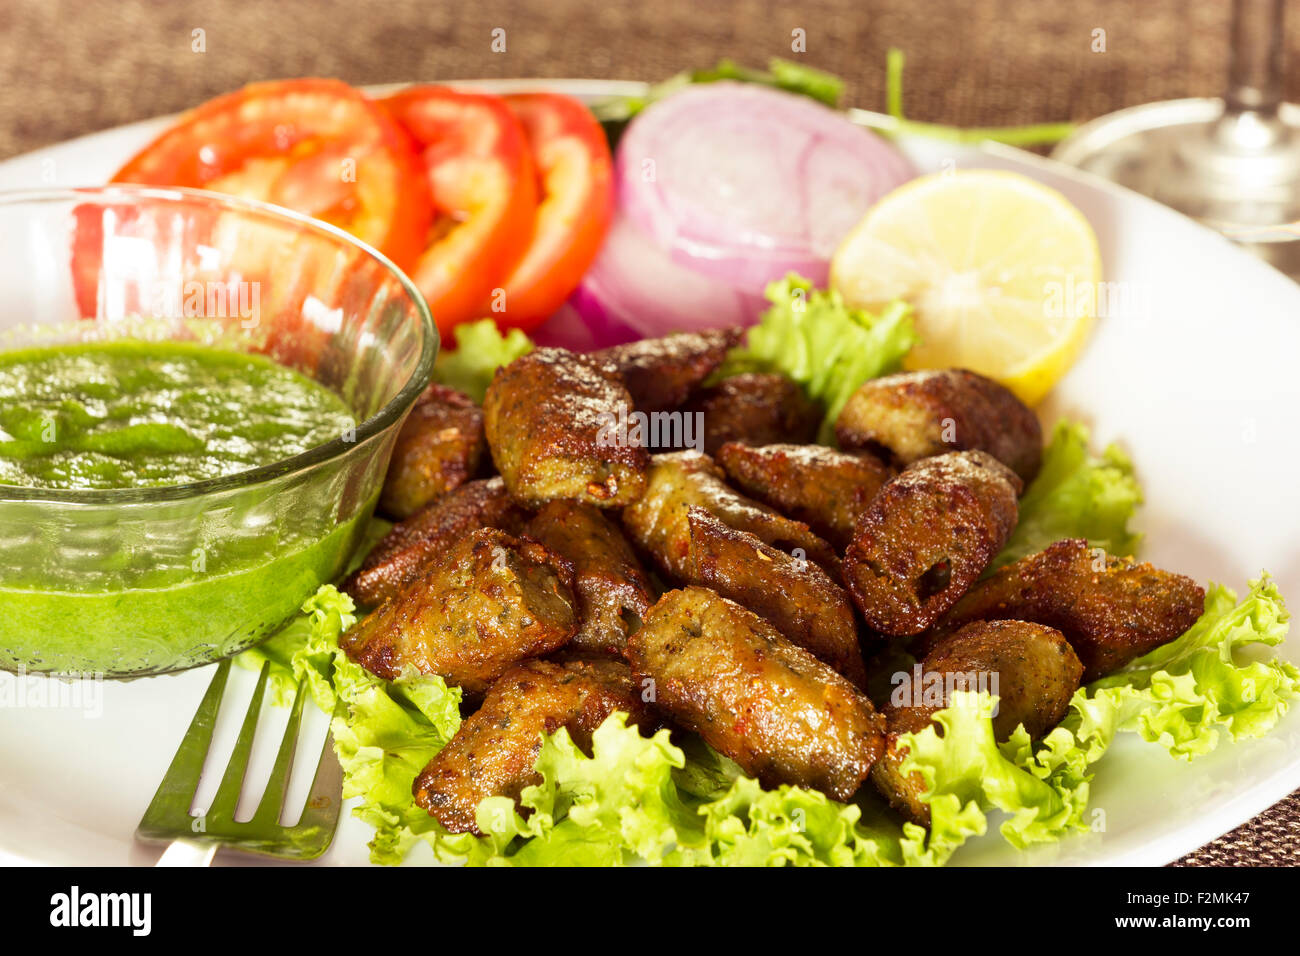 Seekh kabab de pollo a la parrilla con cebolla, tomate, limón, verde chatni Foto de stock